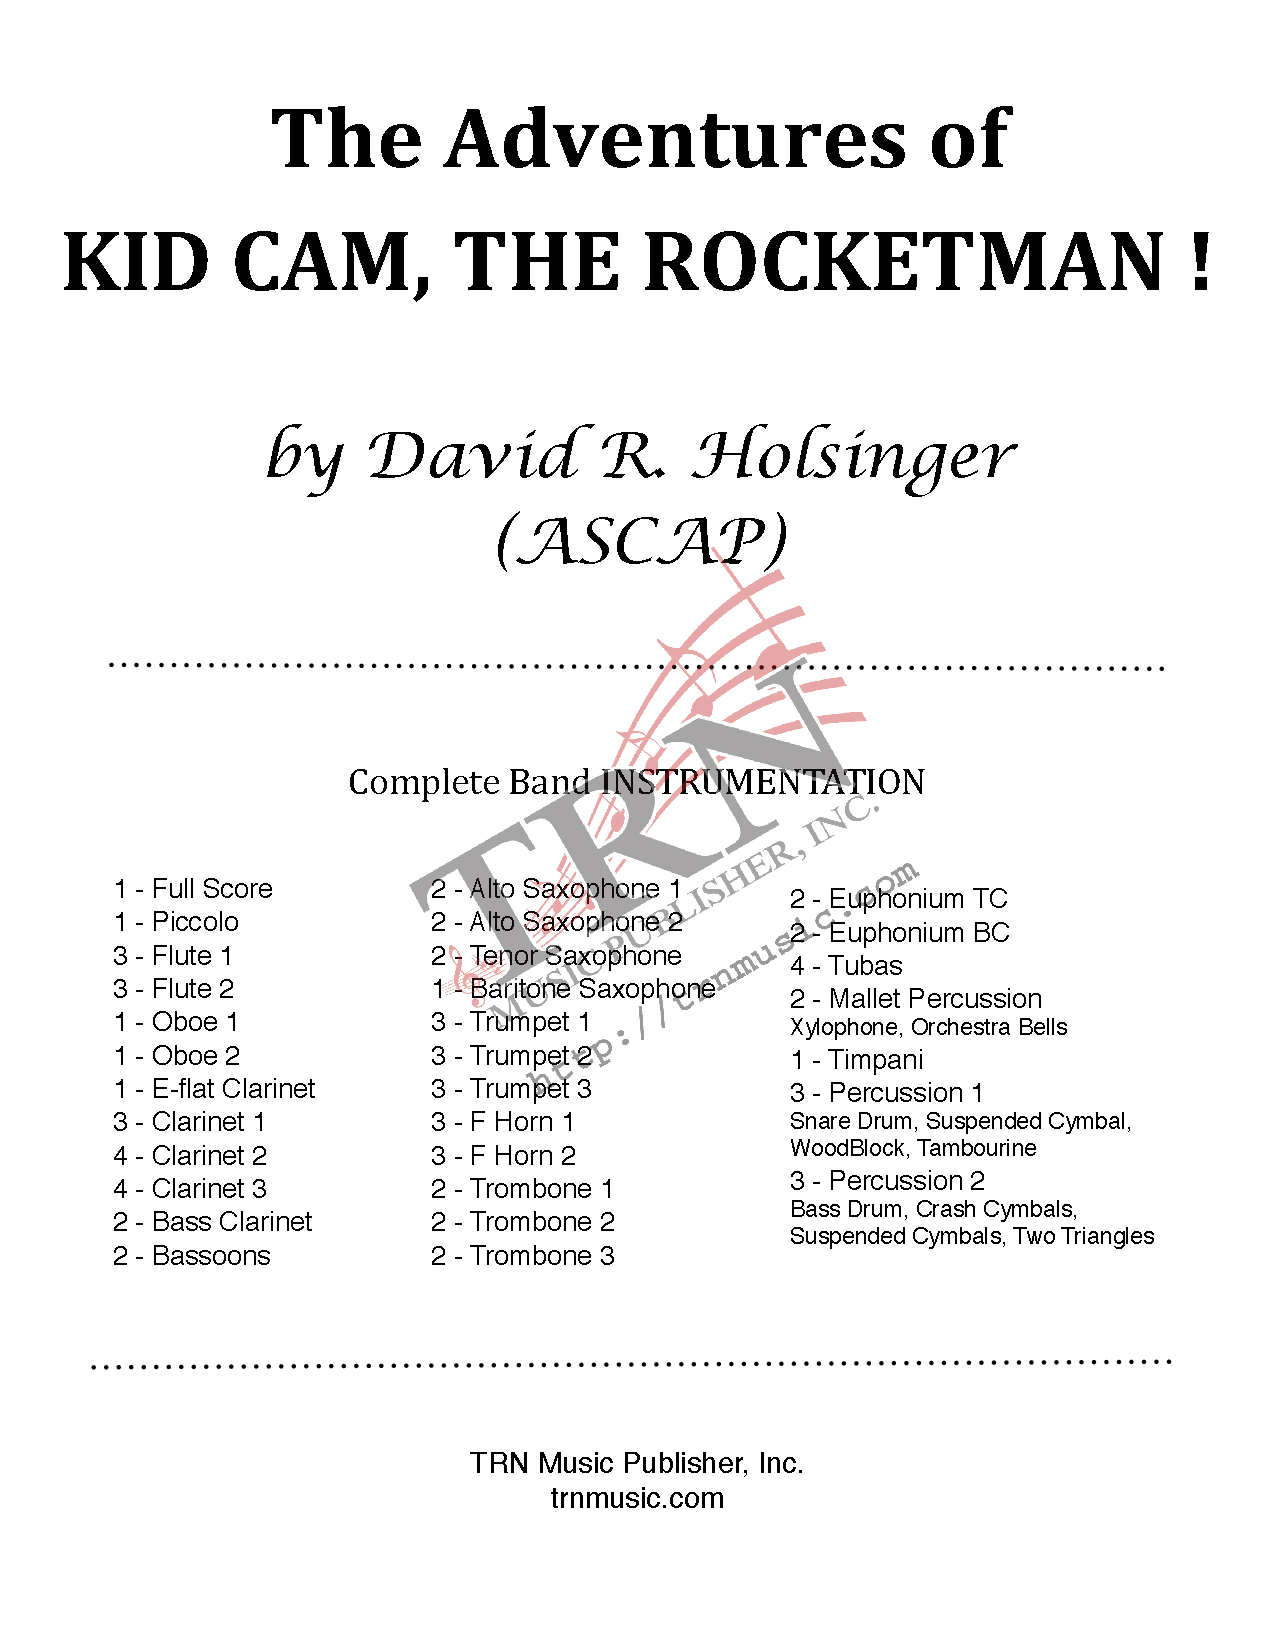 The Adventures of KID CAM, THE ROCKETMAN!